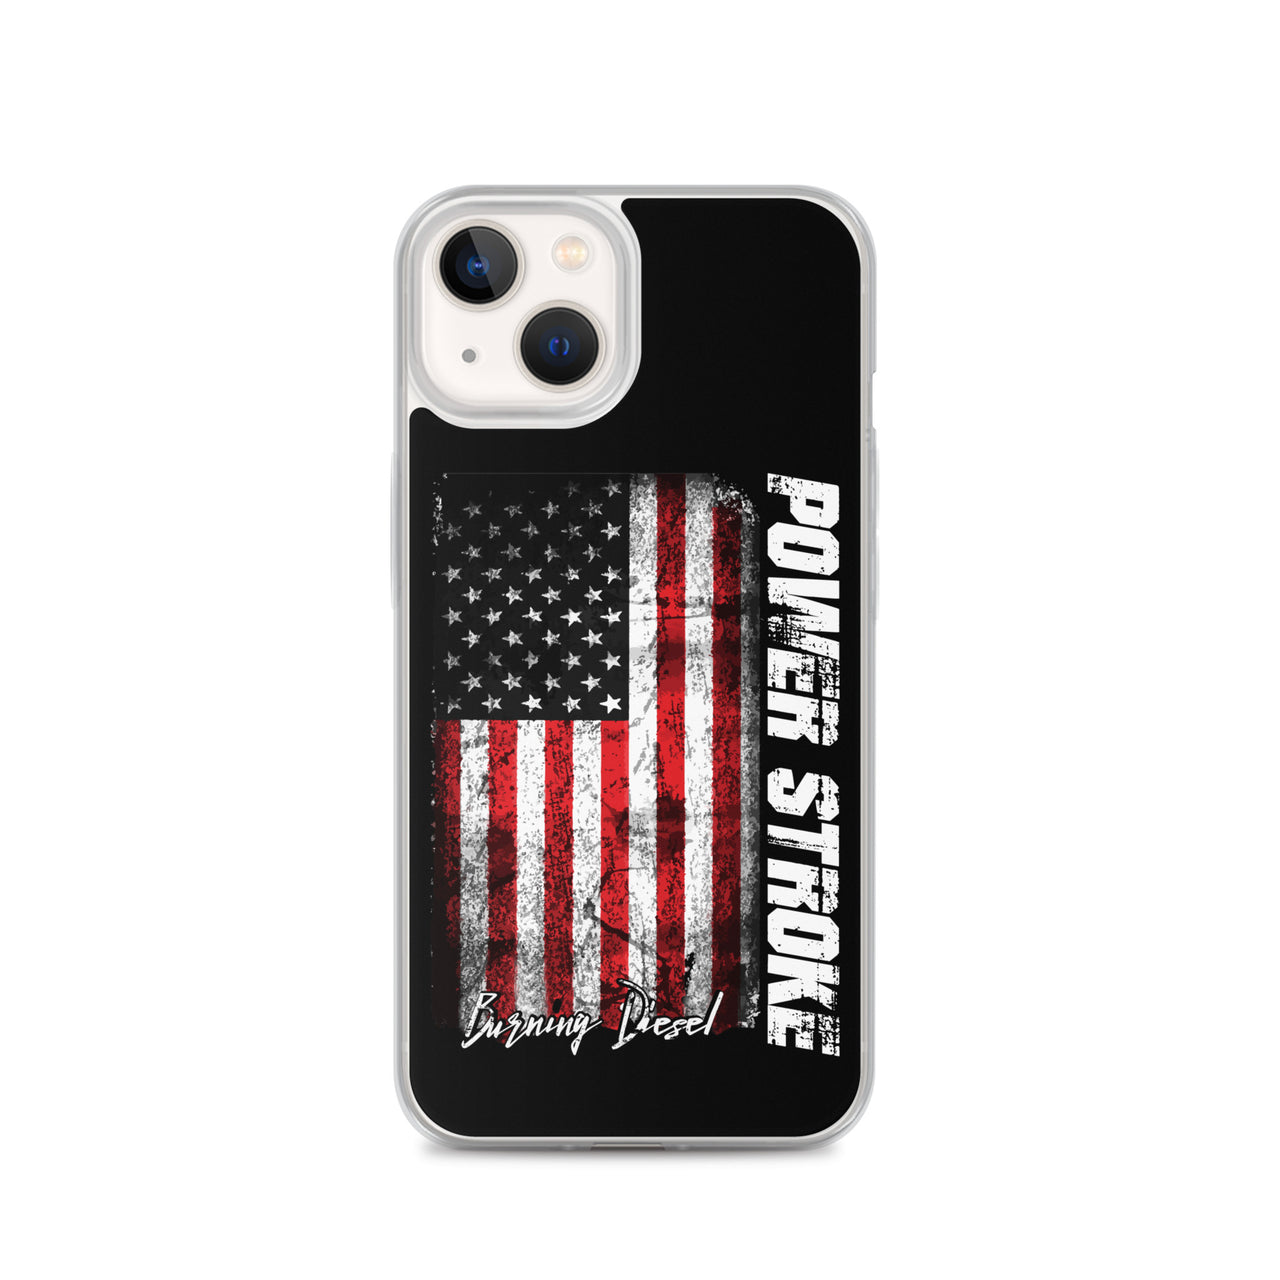 Powerstroke Phone Case Fits iPhone Power Stroke American Flag